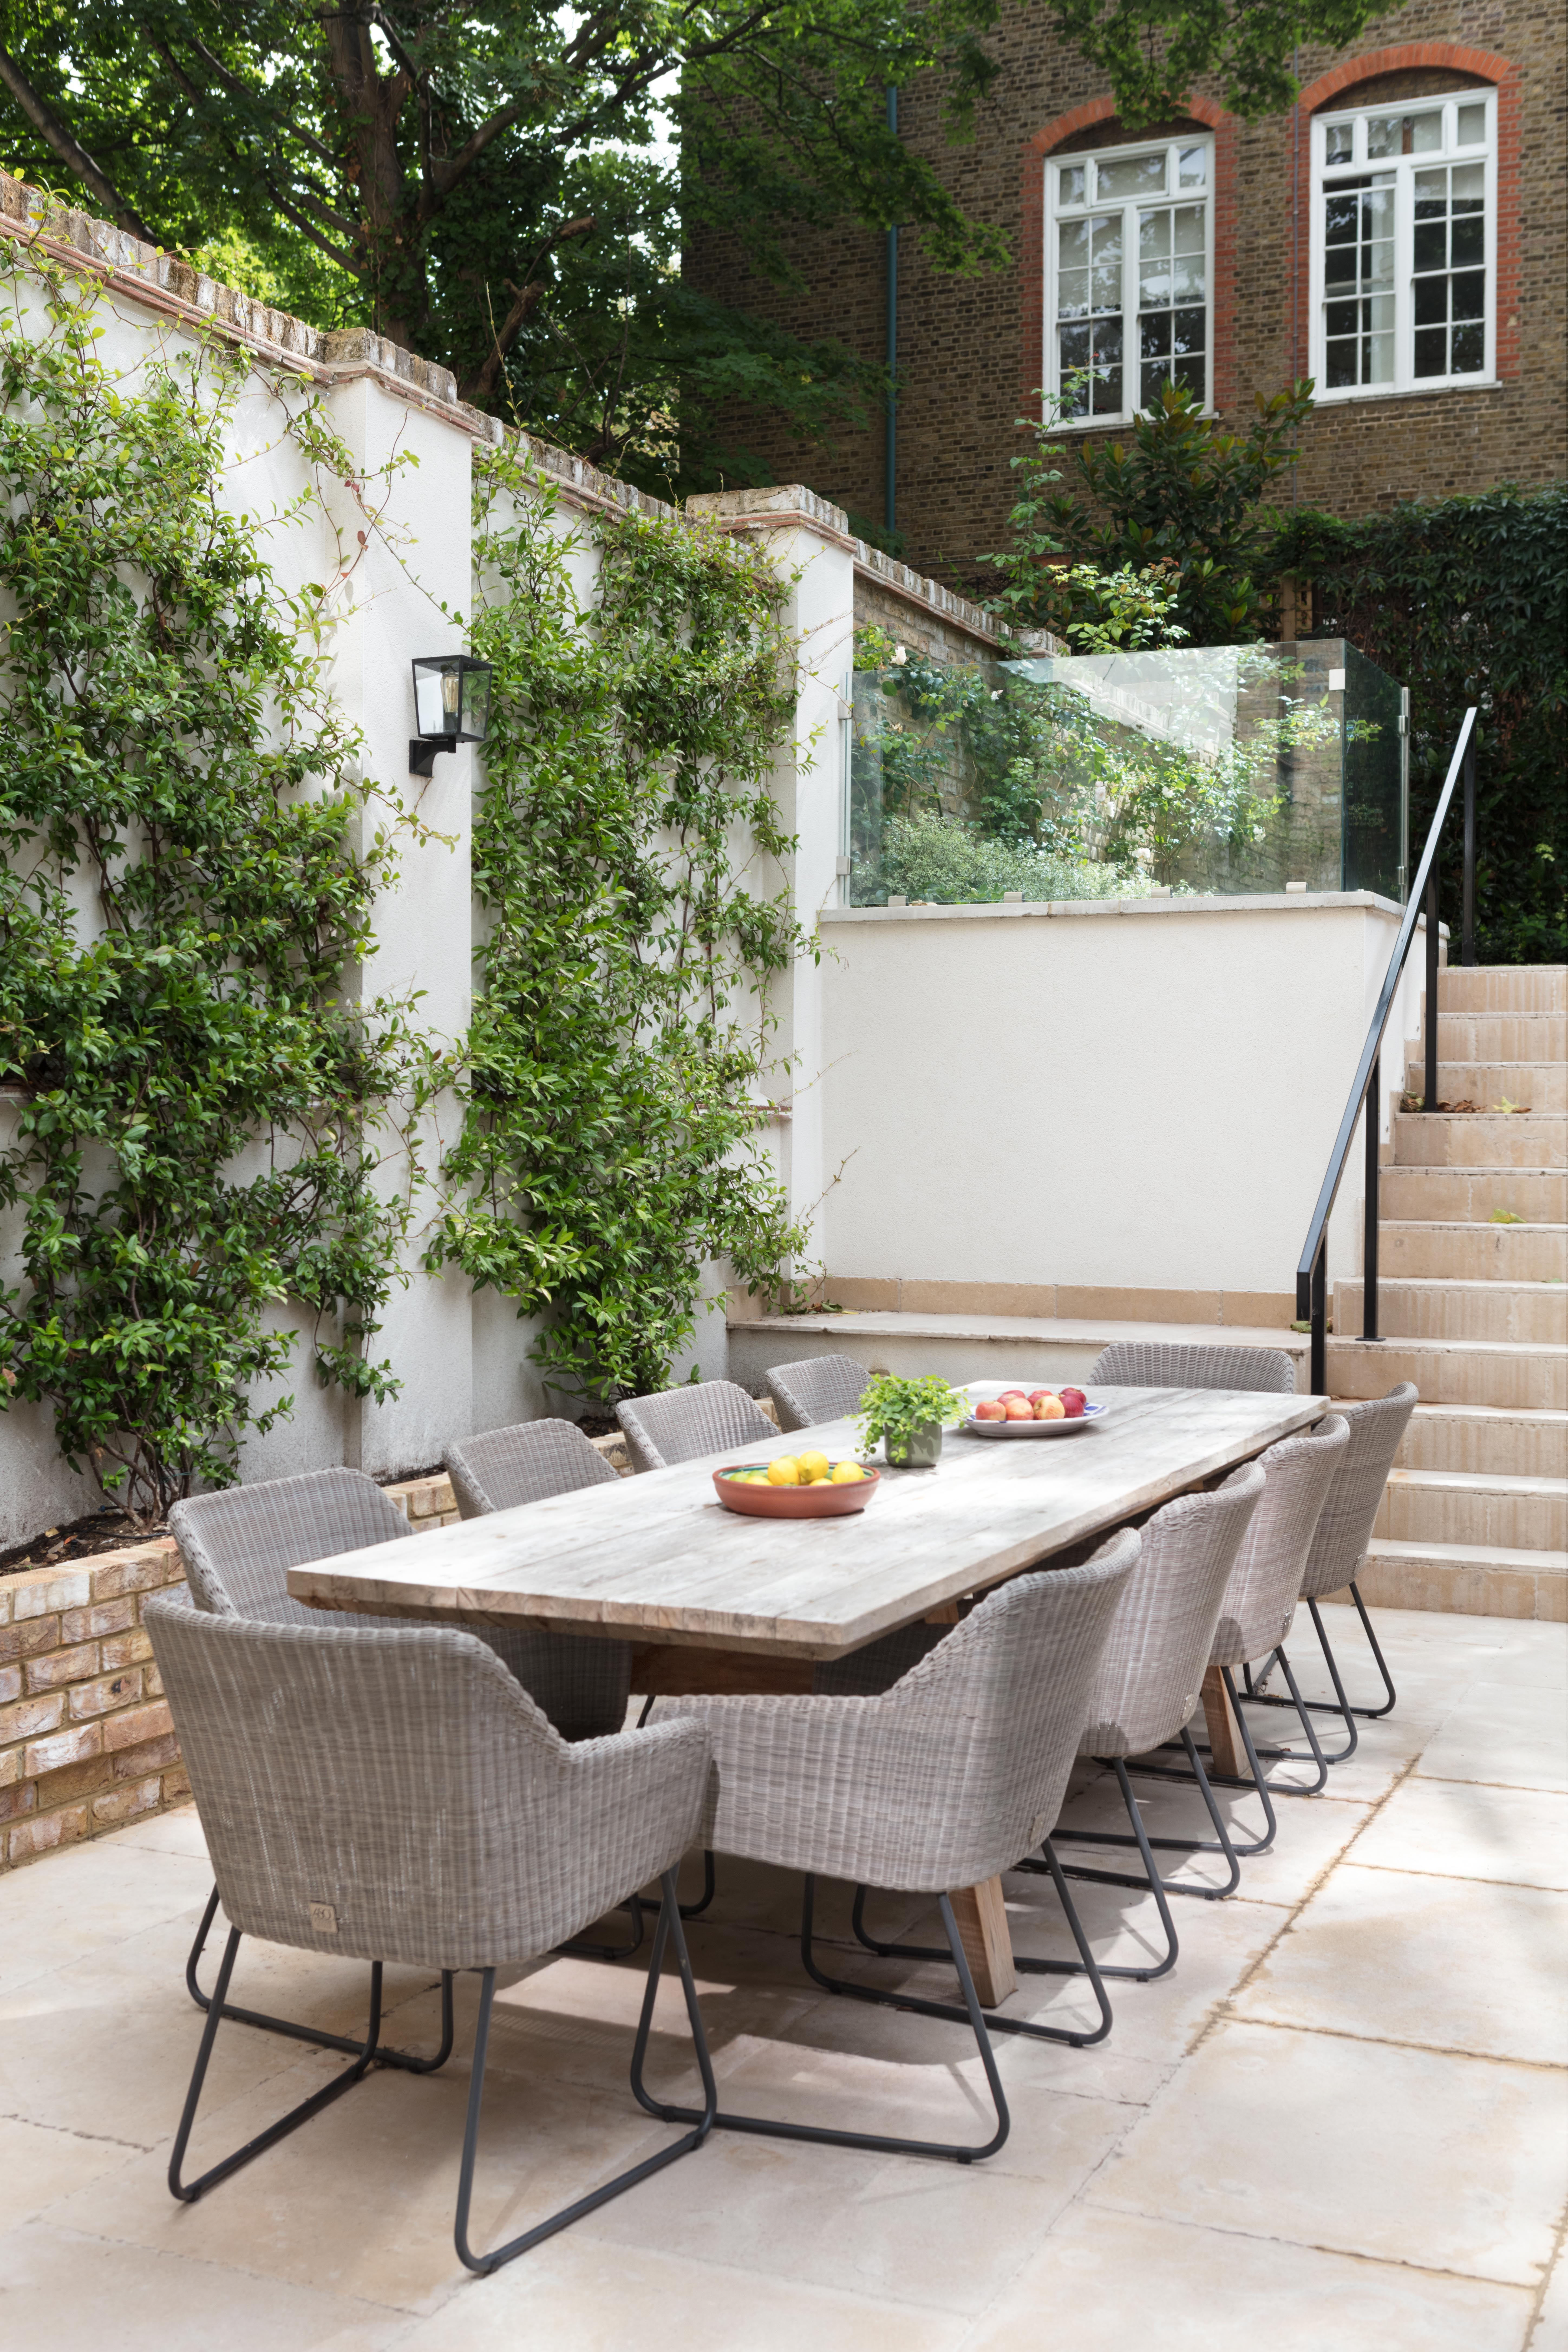 Garden table by Margot Tsim Interiors - contemporary interior design in London